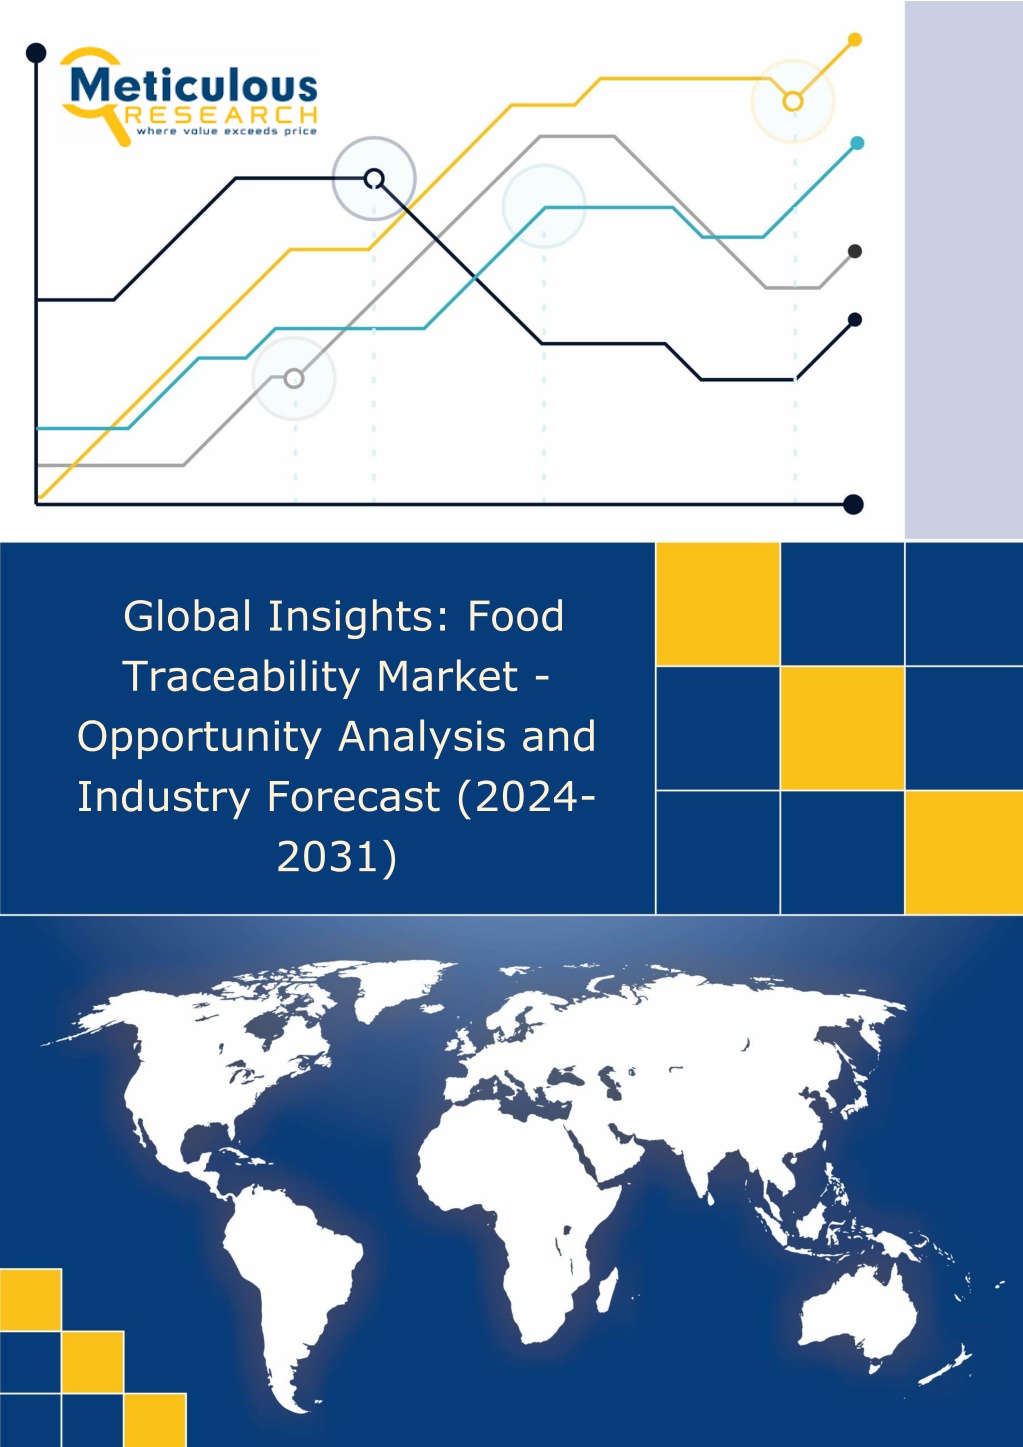 global insights food traceability market l.w